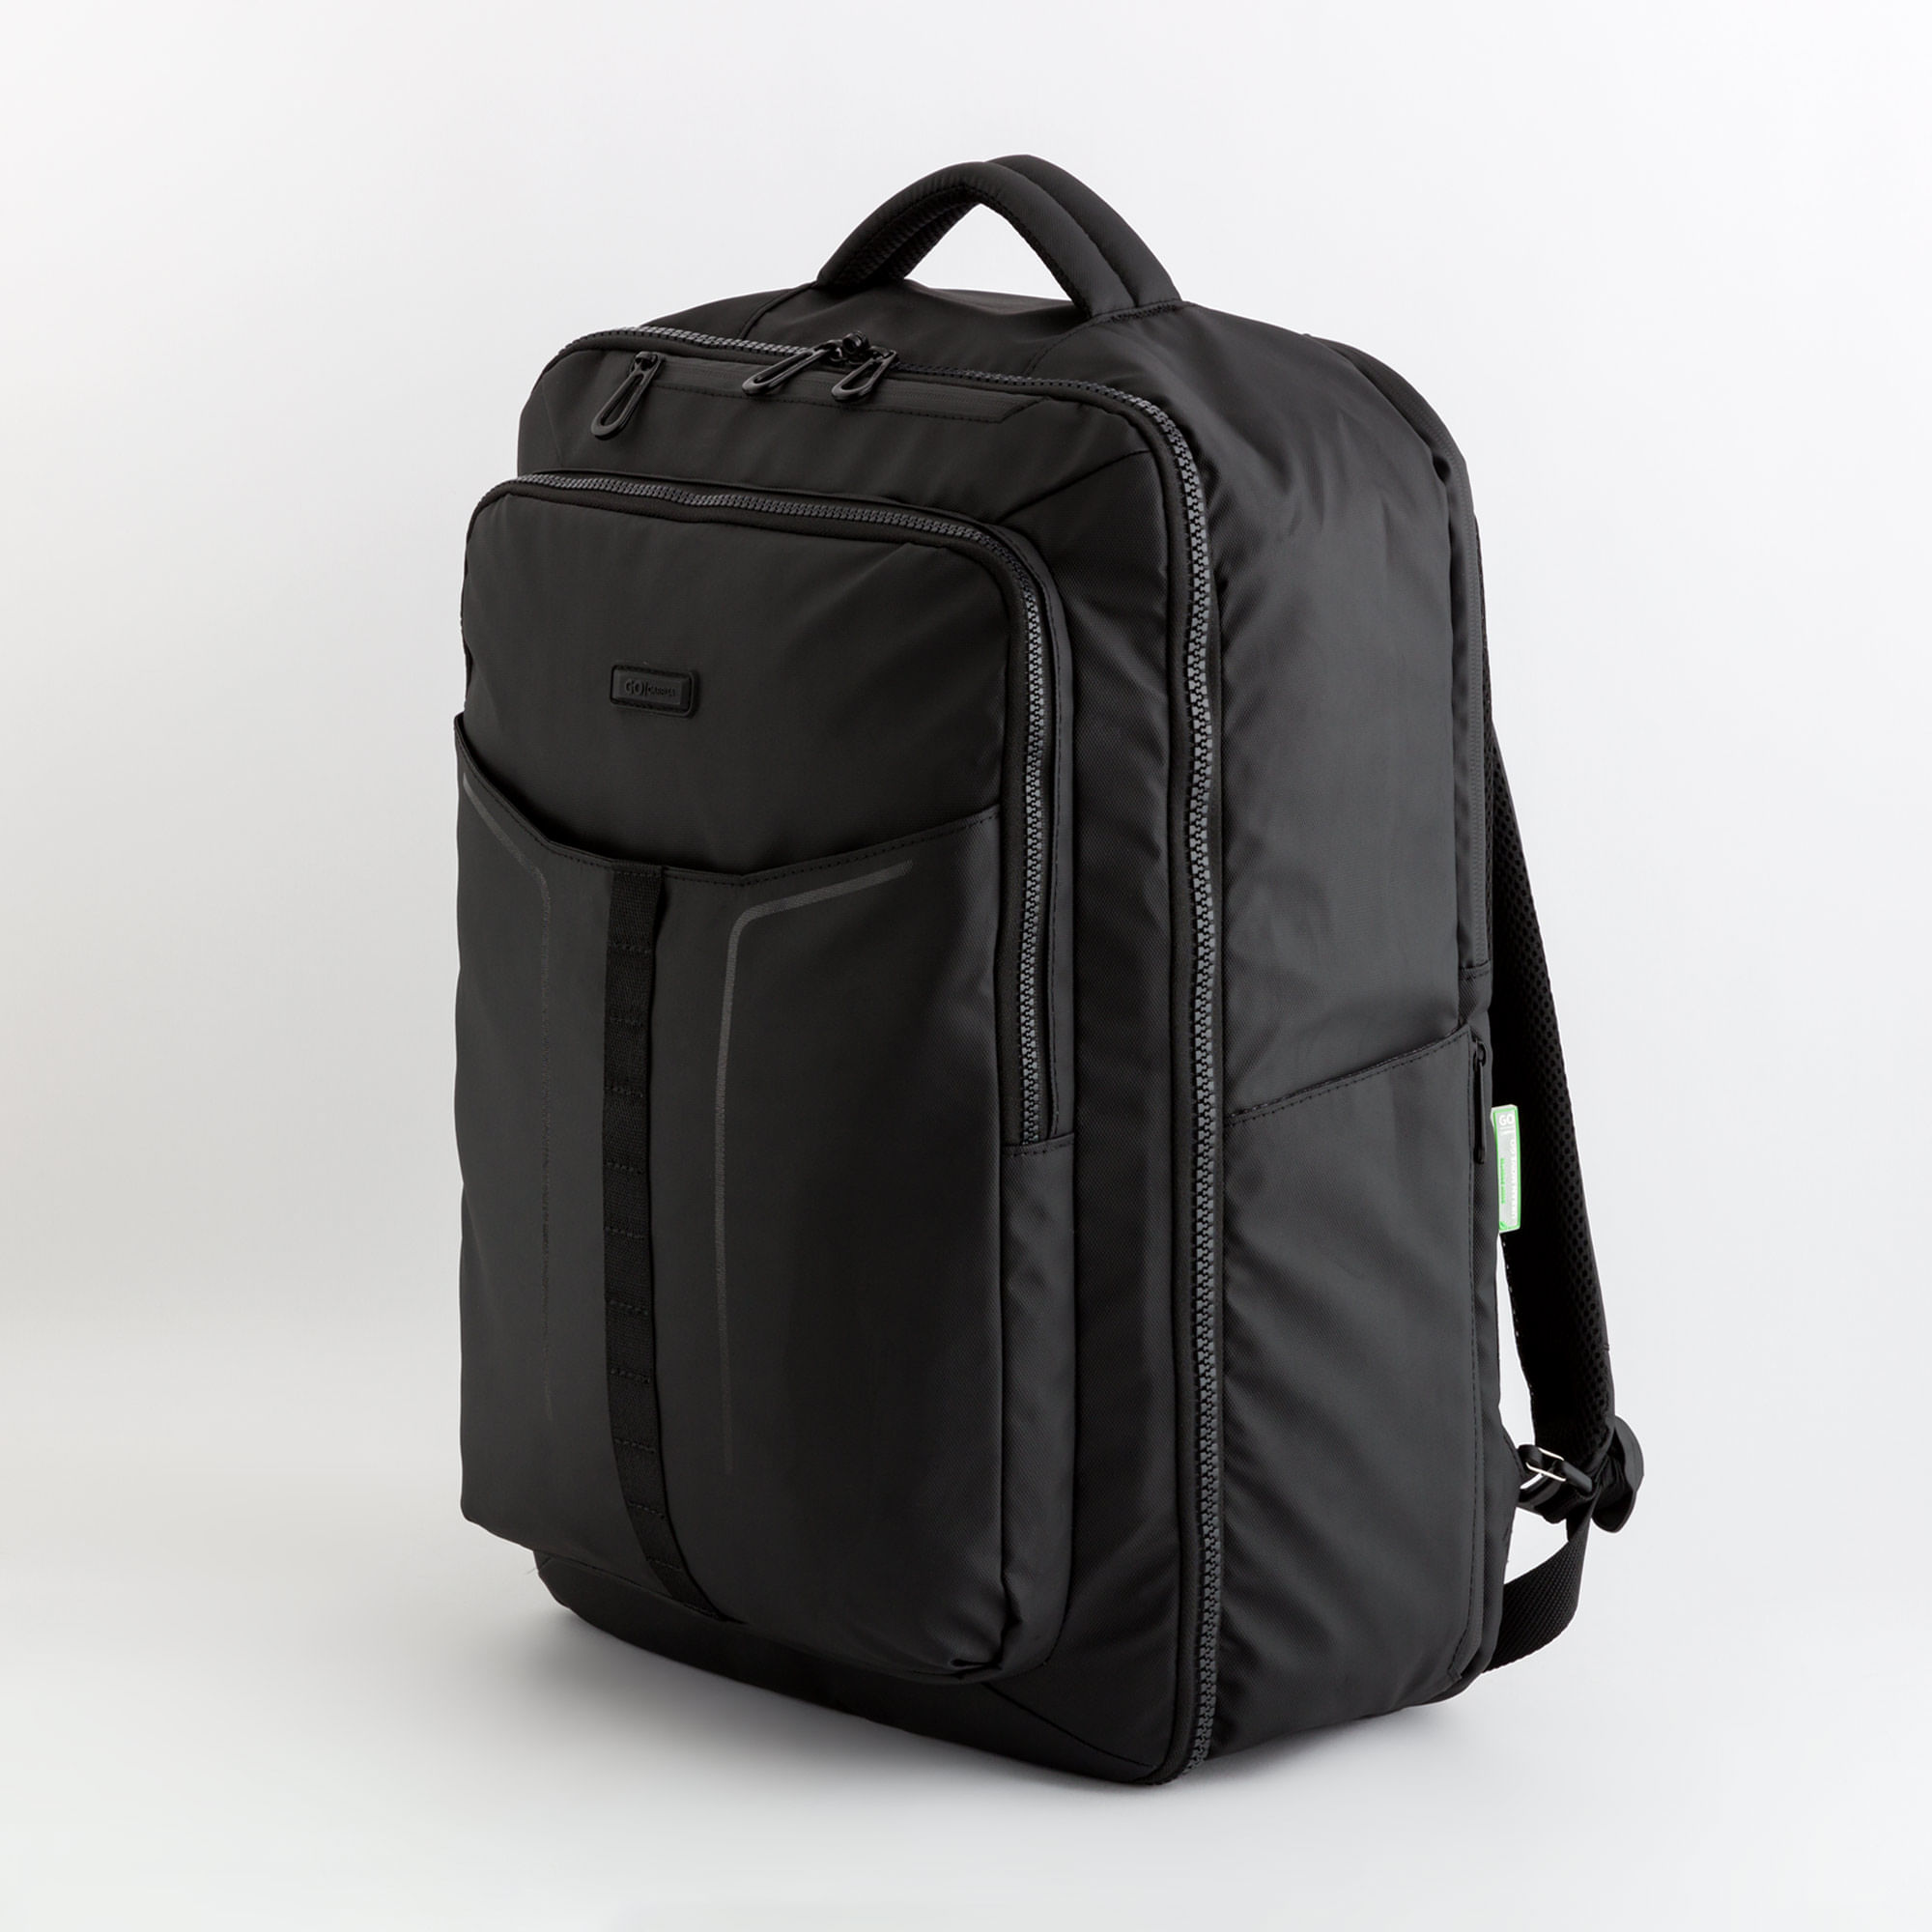 Duffel bag/Backpack - Urban Move Go - Carpisa